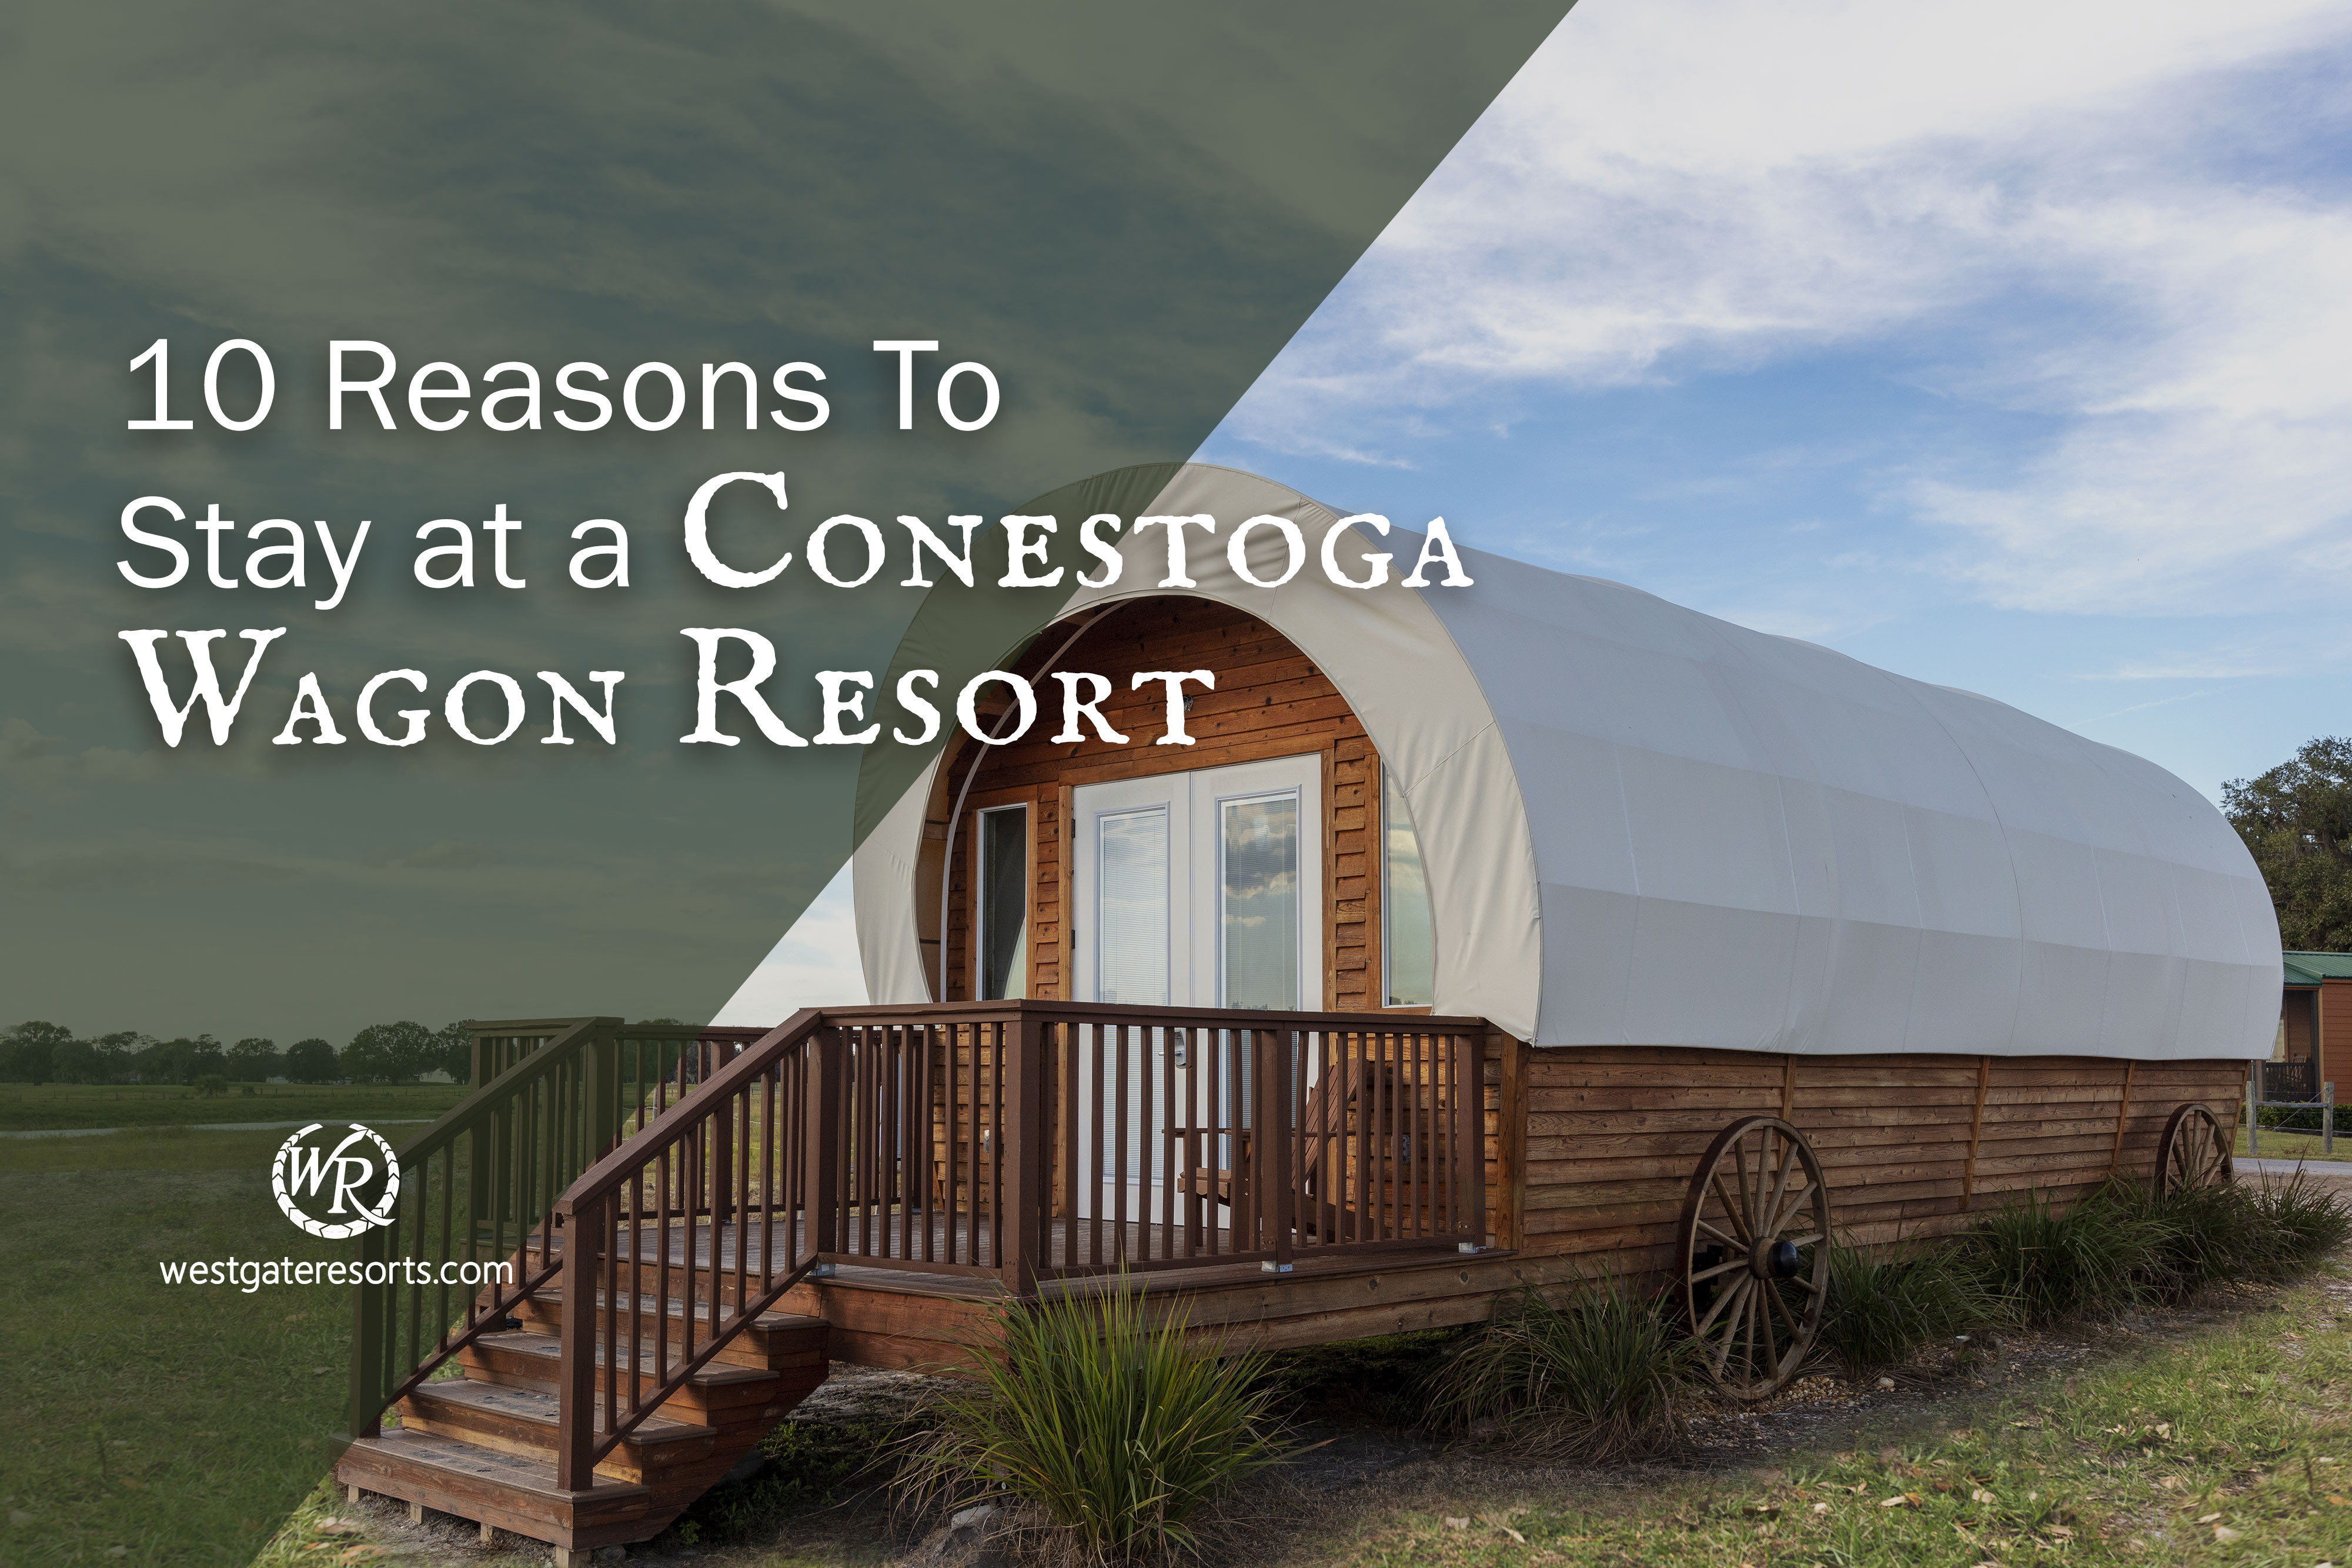 10 Reasons To Stay at a Conestoga Wagon Resort